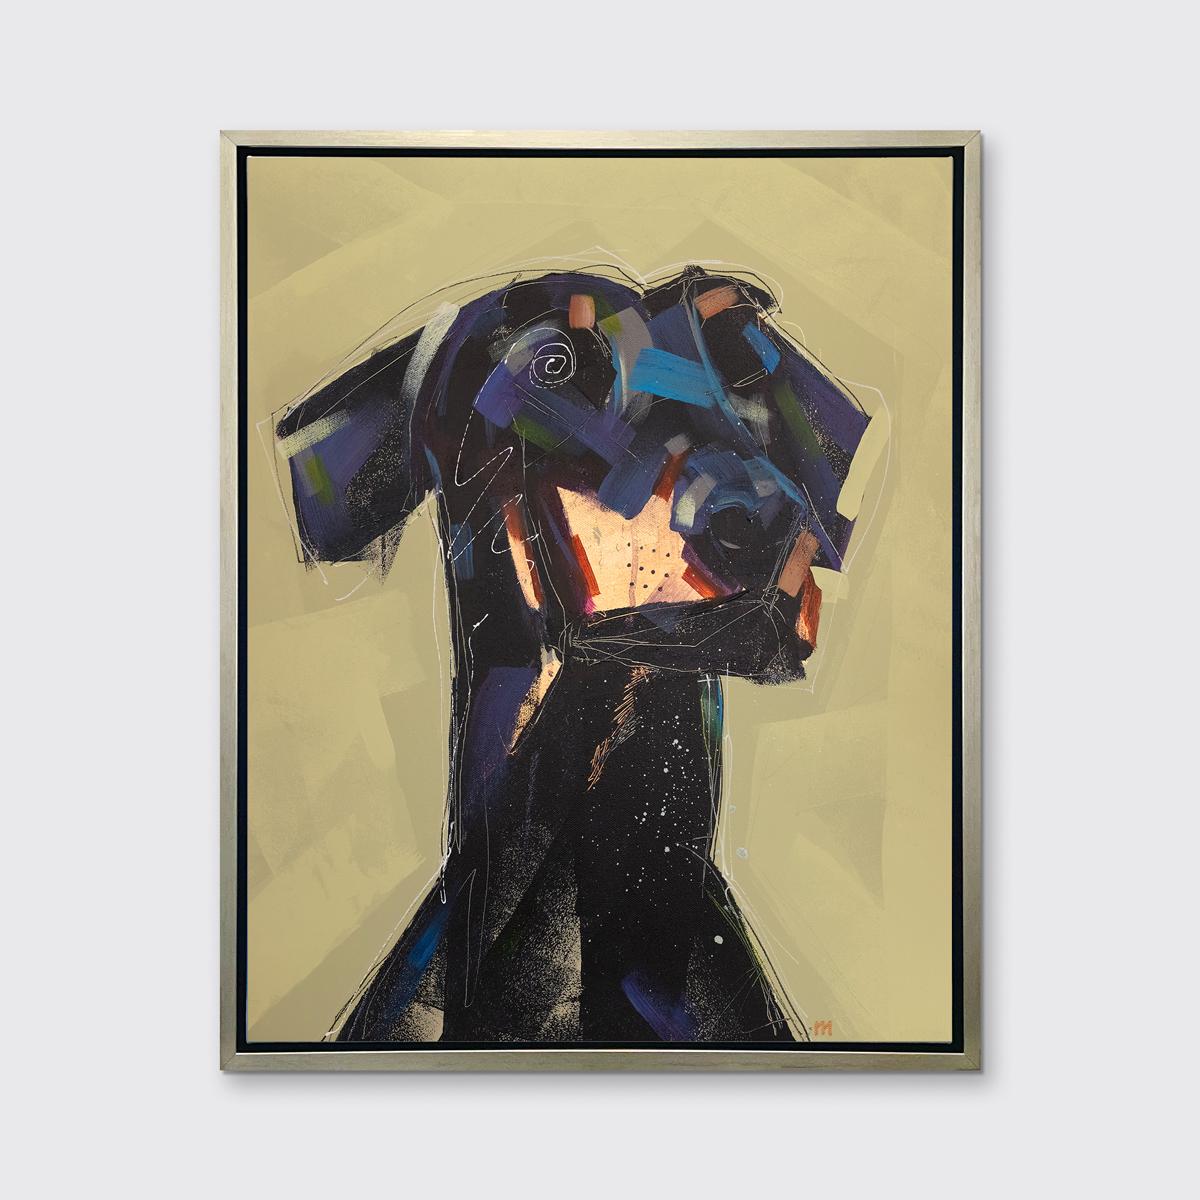 Russell Miyaki Abstract Print - "Doberman" Limited Edition Giclee Print, 45" x 36"